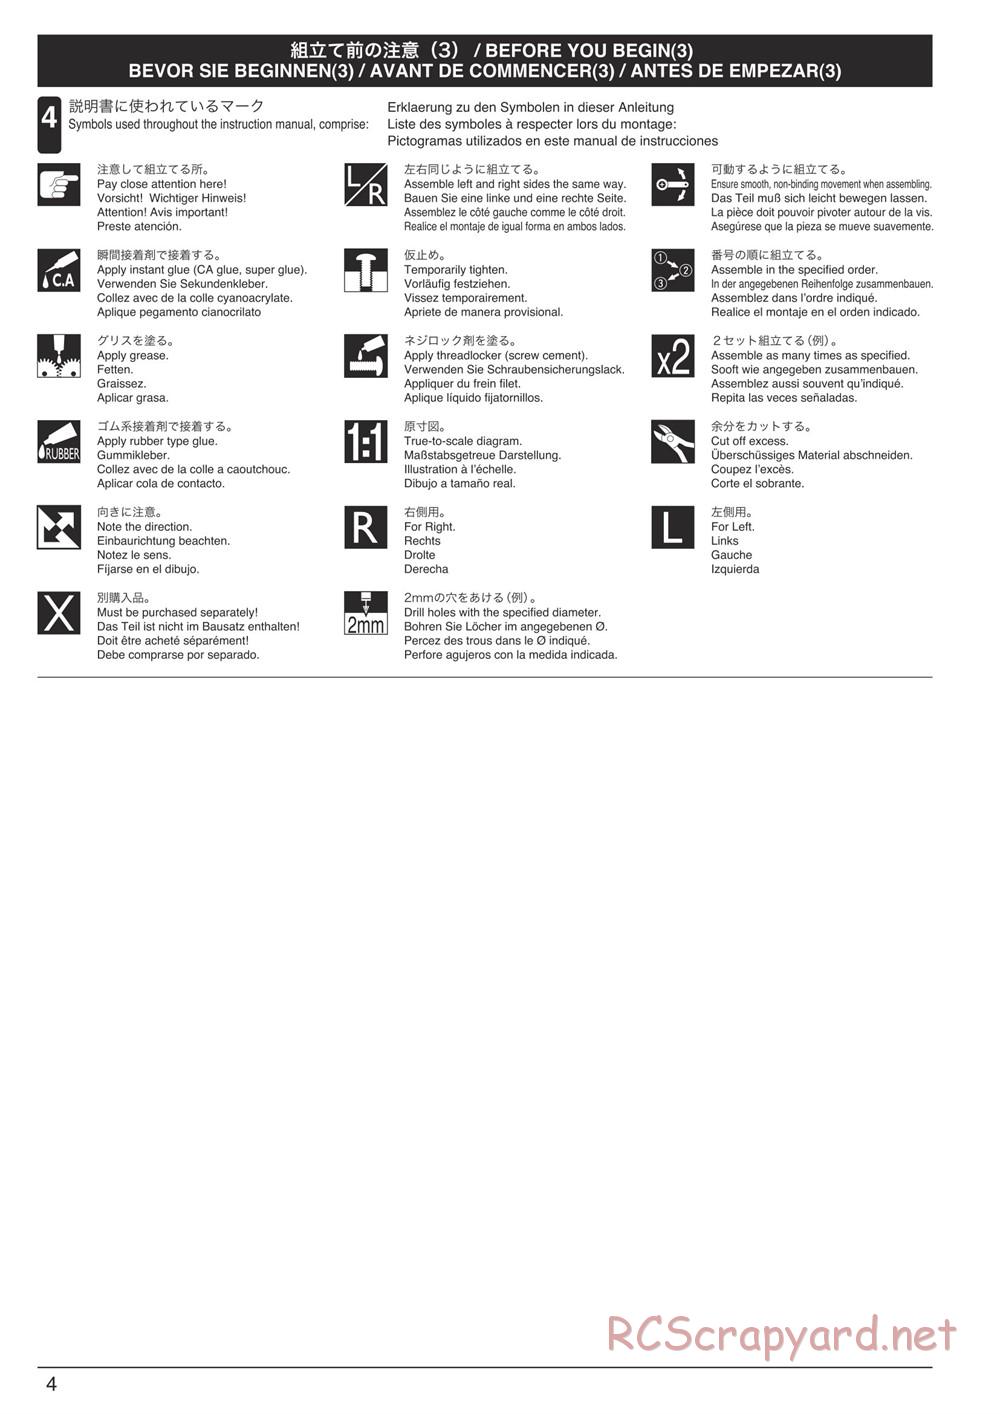 Kyosho - DBX 2.0 - Manual - Page 4